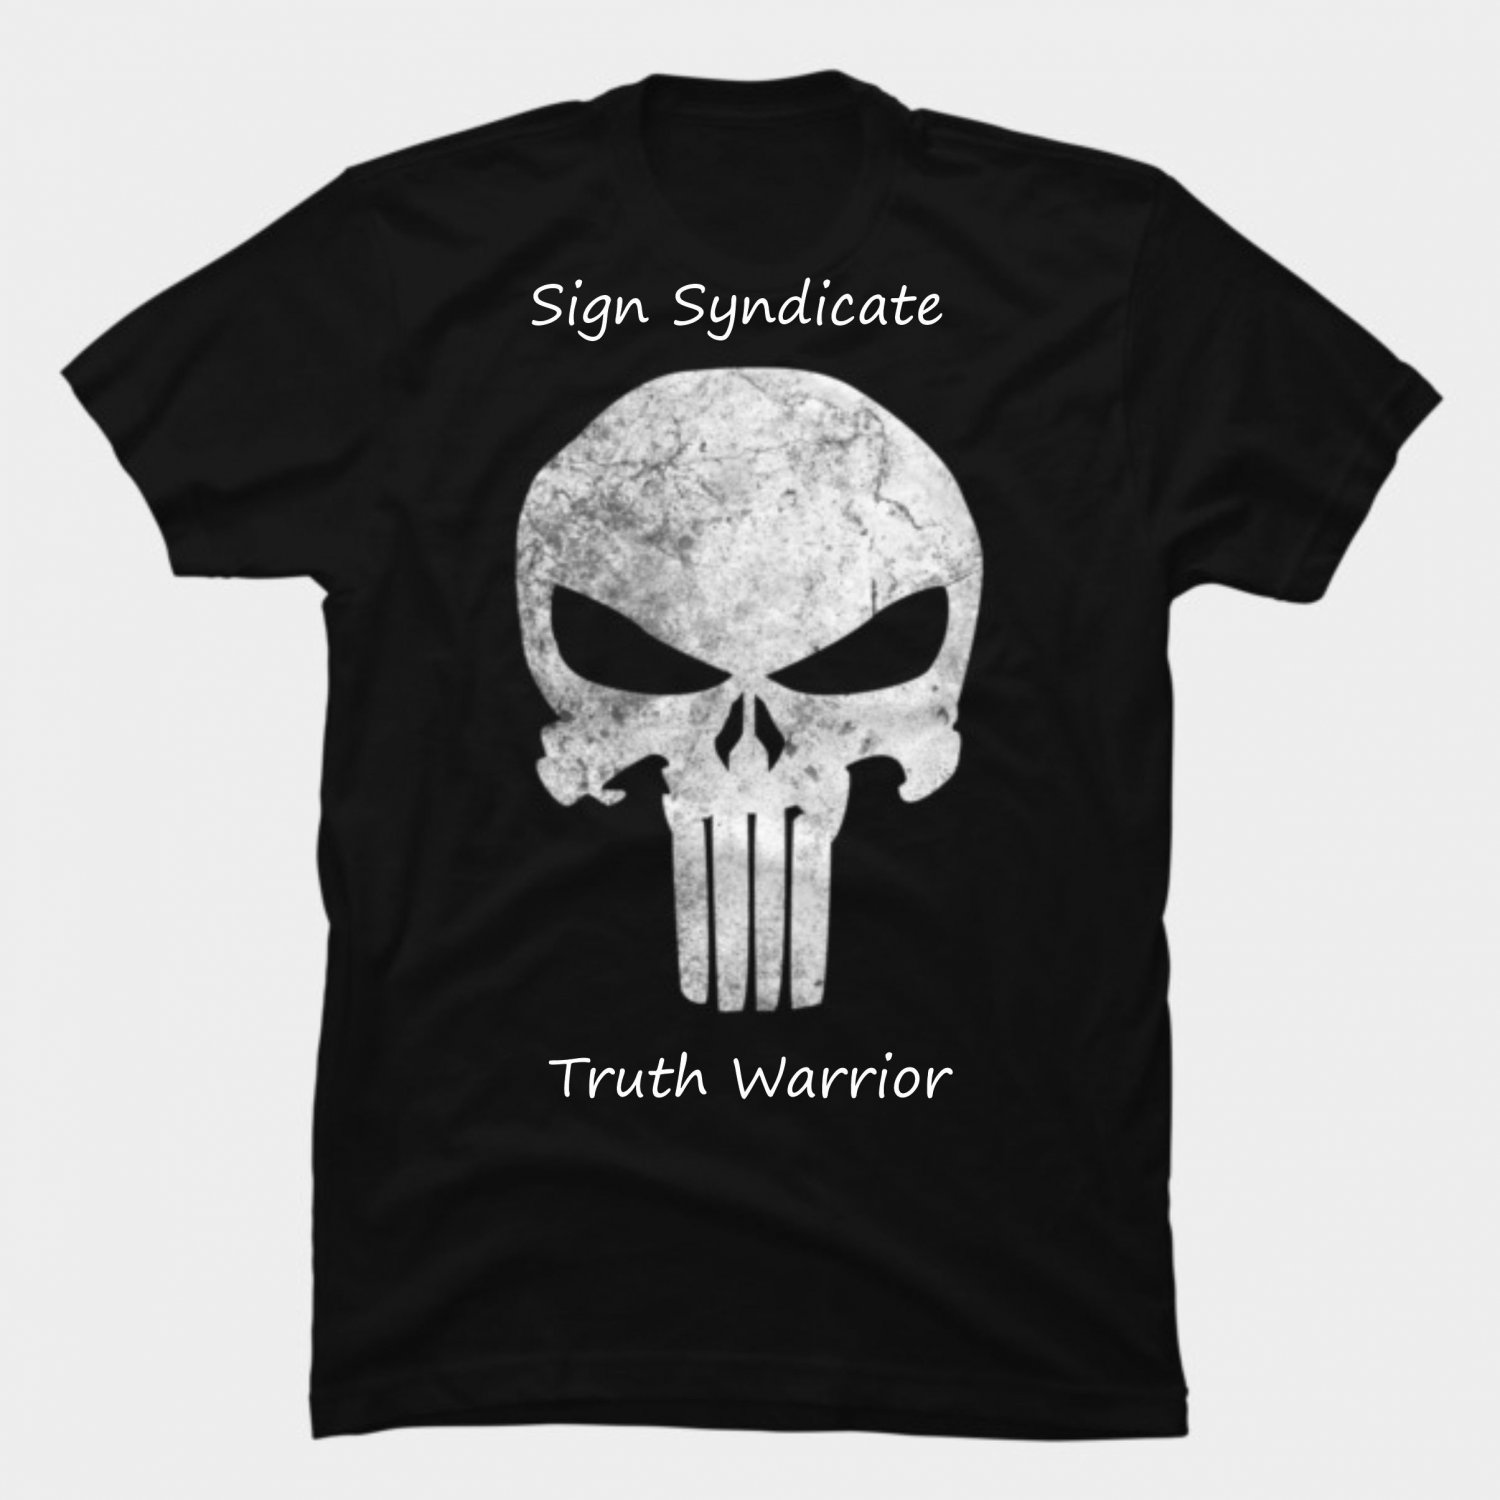 Punisher Sign Syndicate Shirt.jpg